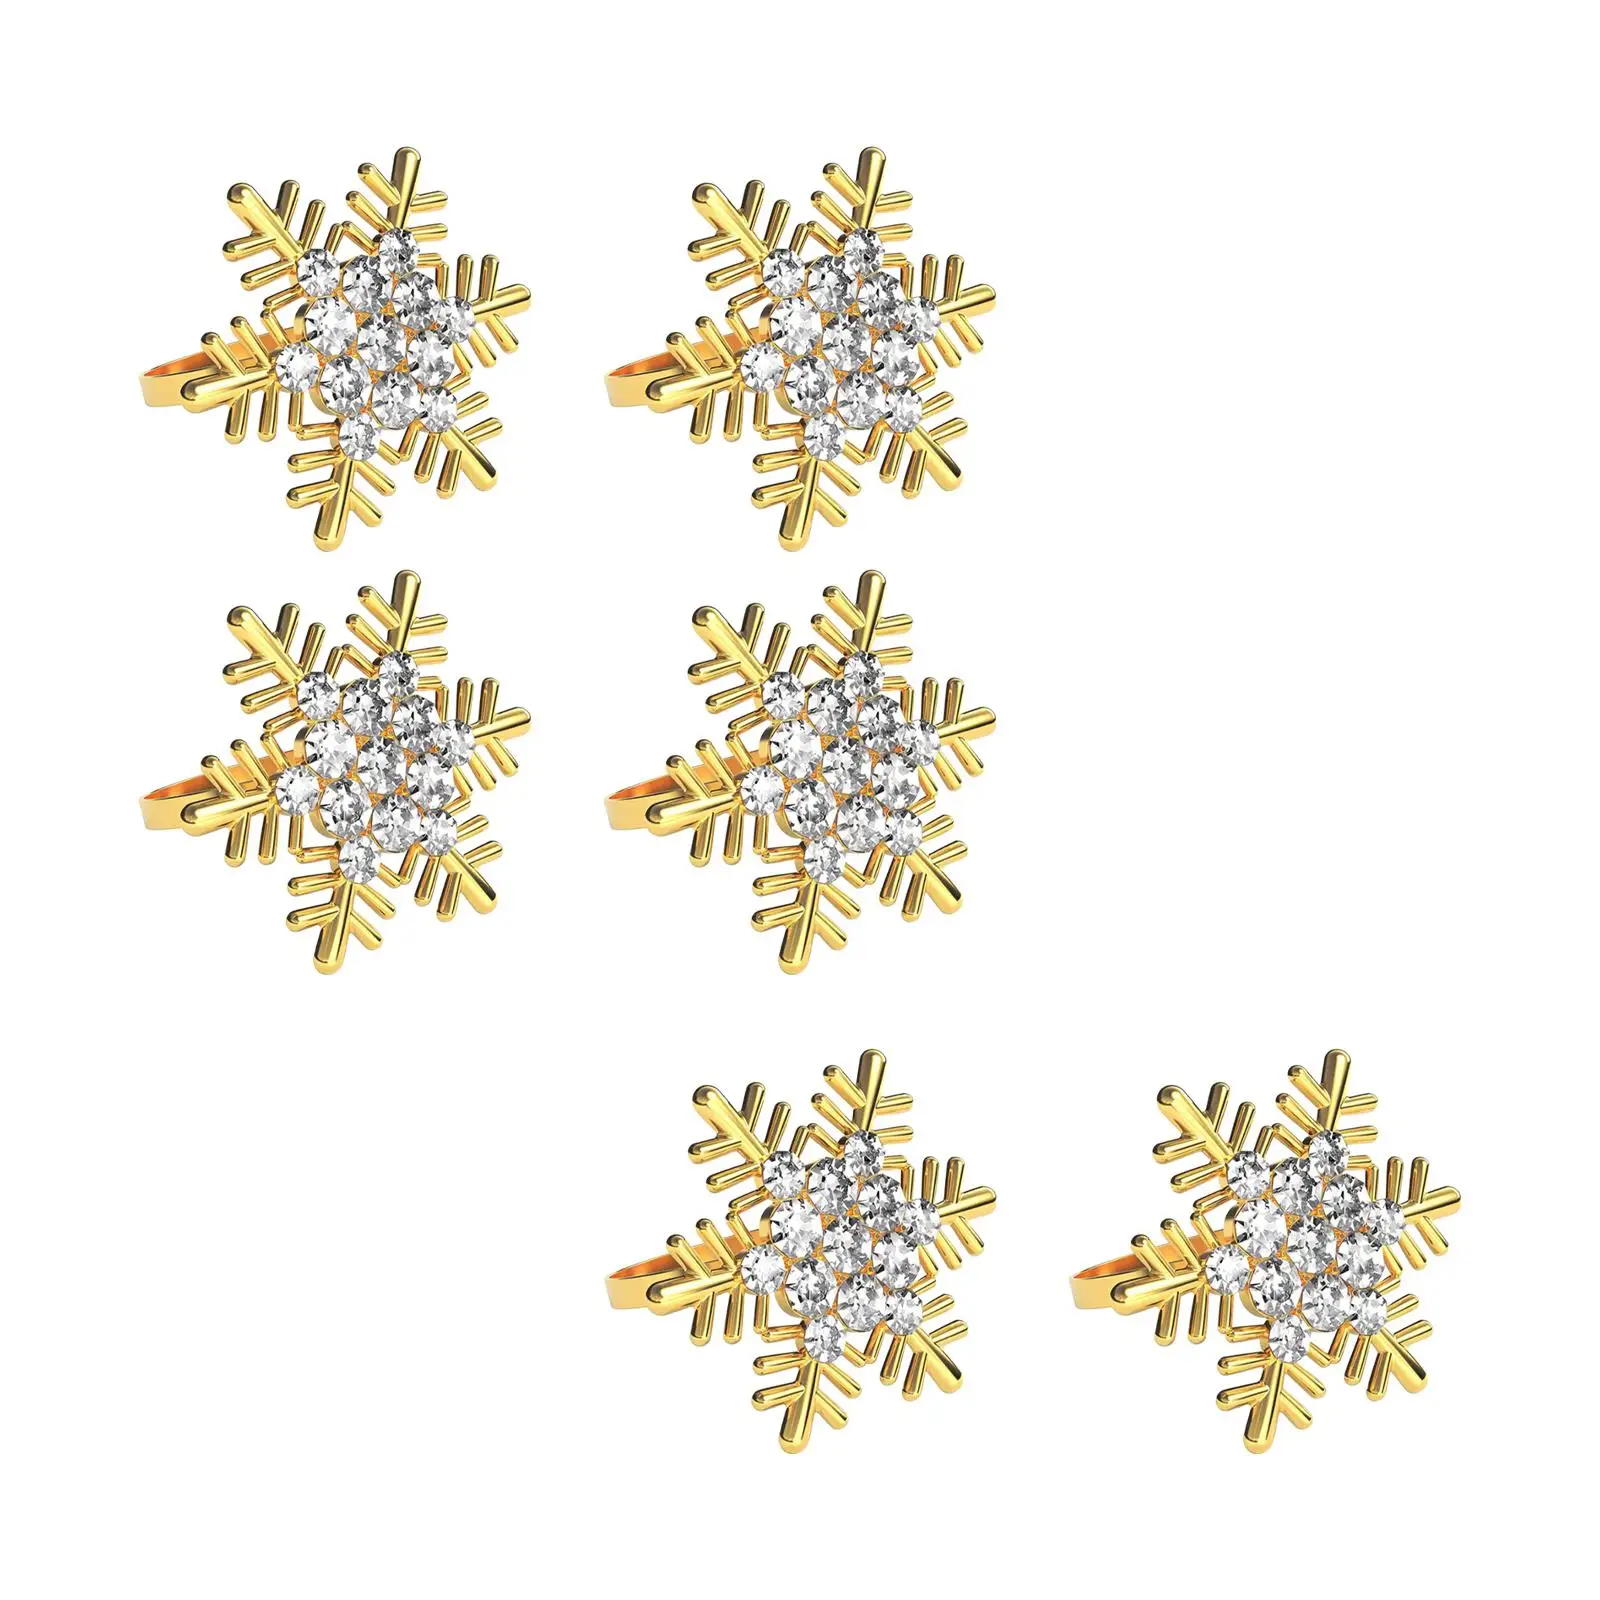 6 Pieces Snowflake Napkin Rings Household Metal Christmas Napkin Rings for Banquet Table Settings Christmas Wedding Decoration